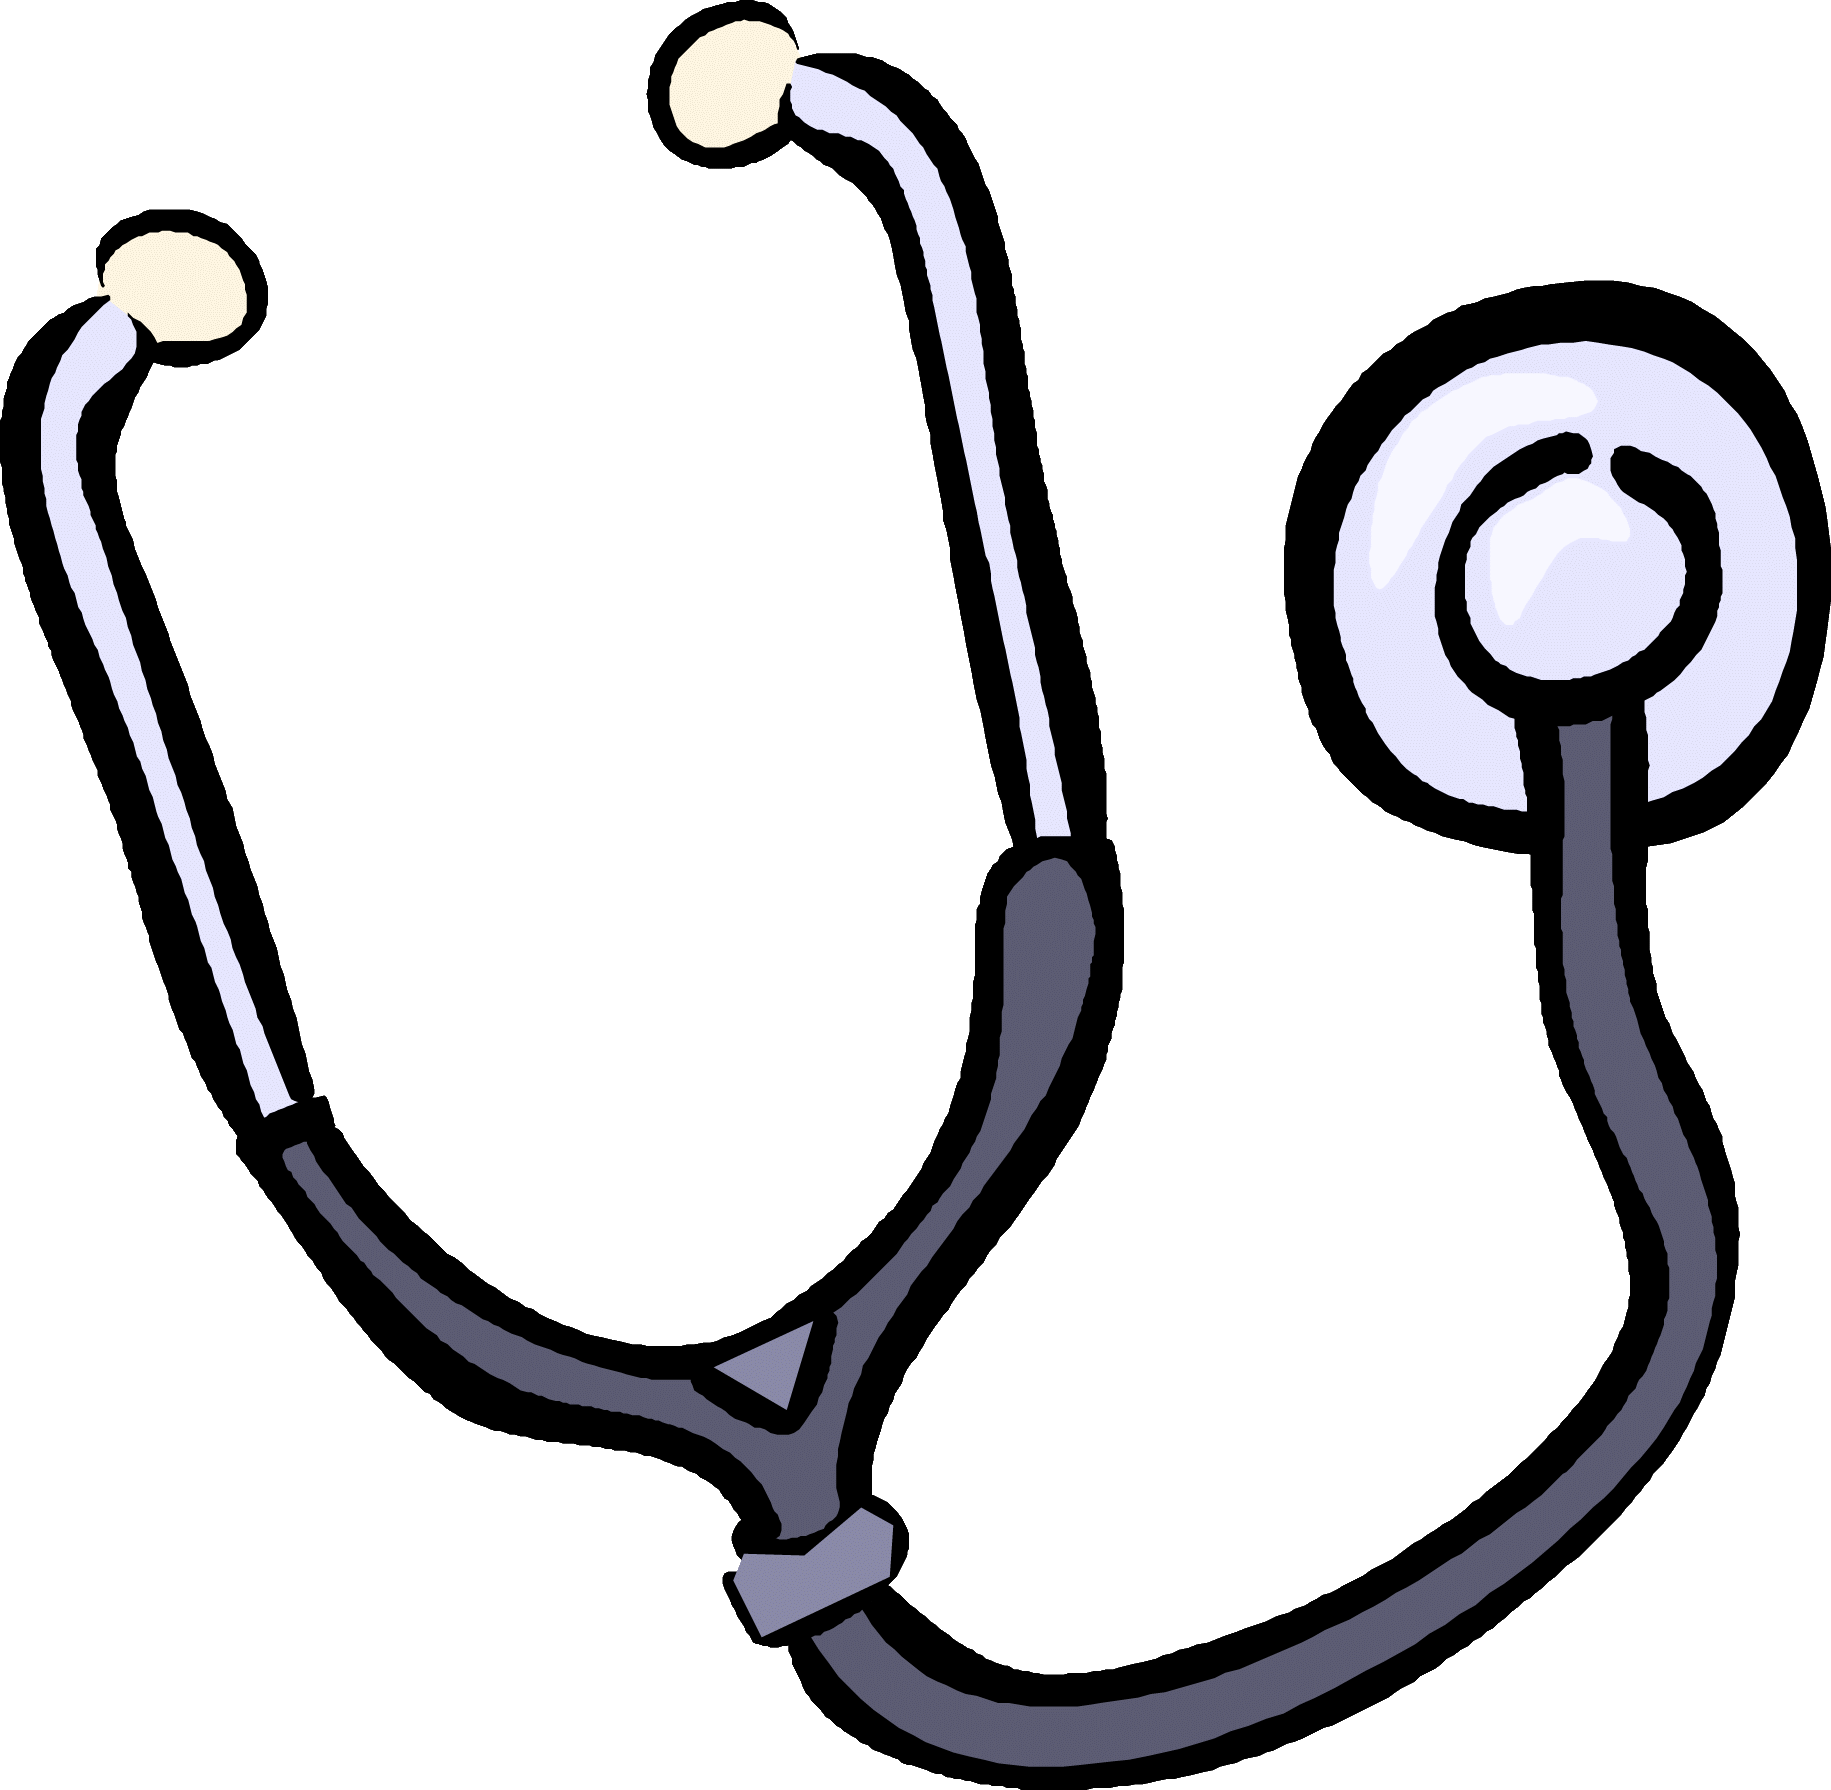 Doctors Tools - Doctors Heart Hearing Tool (1831x1790)